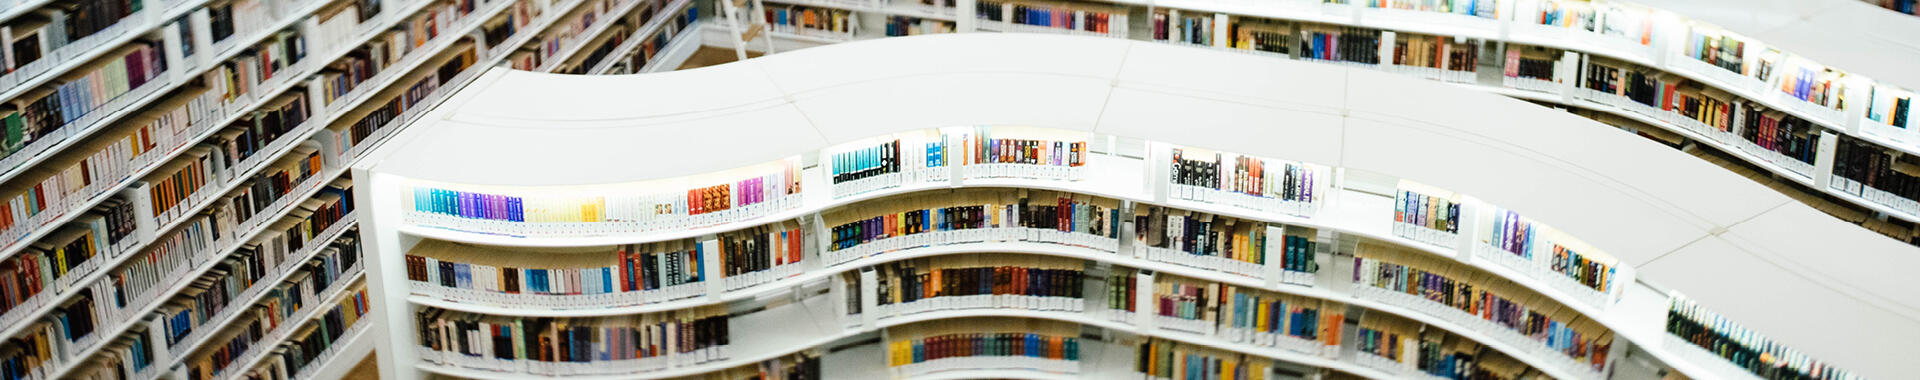 Library. Photo by chuttersnap on Unsplash